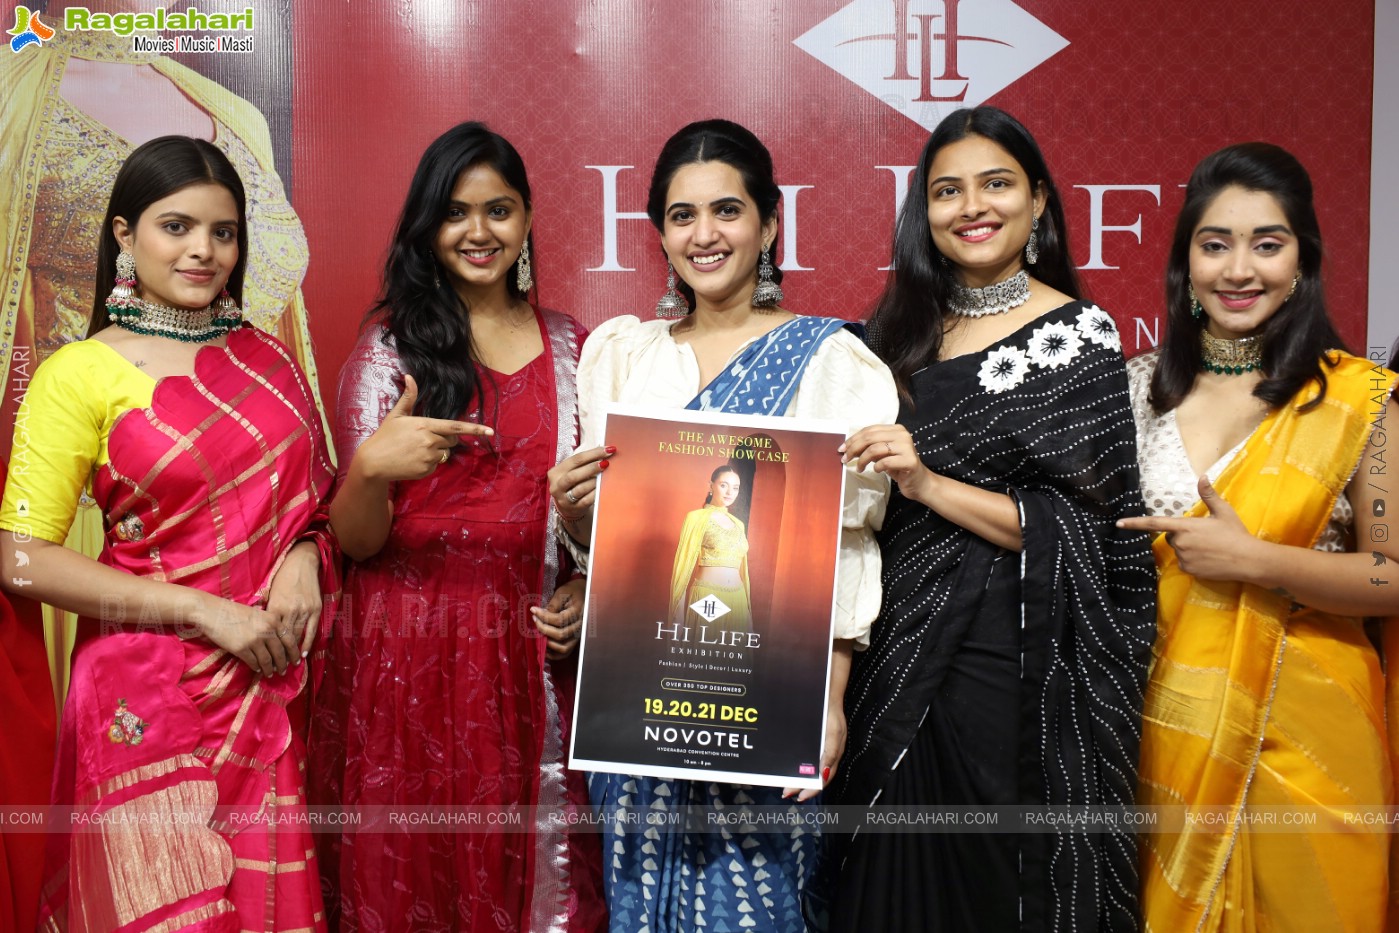 Hi Life Exhibition Fashion Showcase Date Announcement Event, Hyderabad